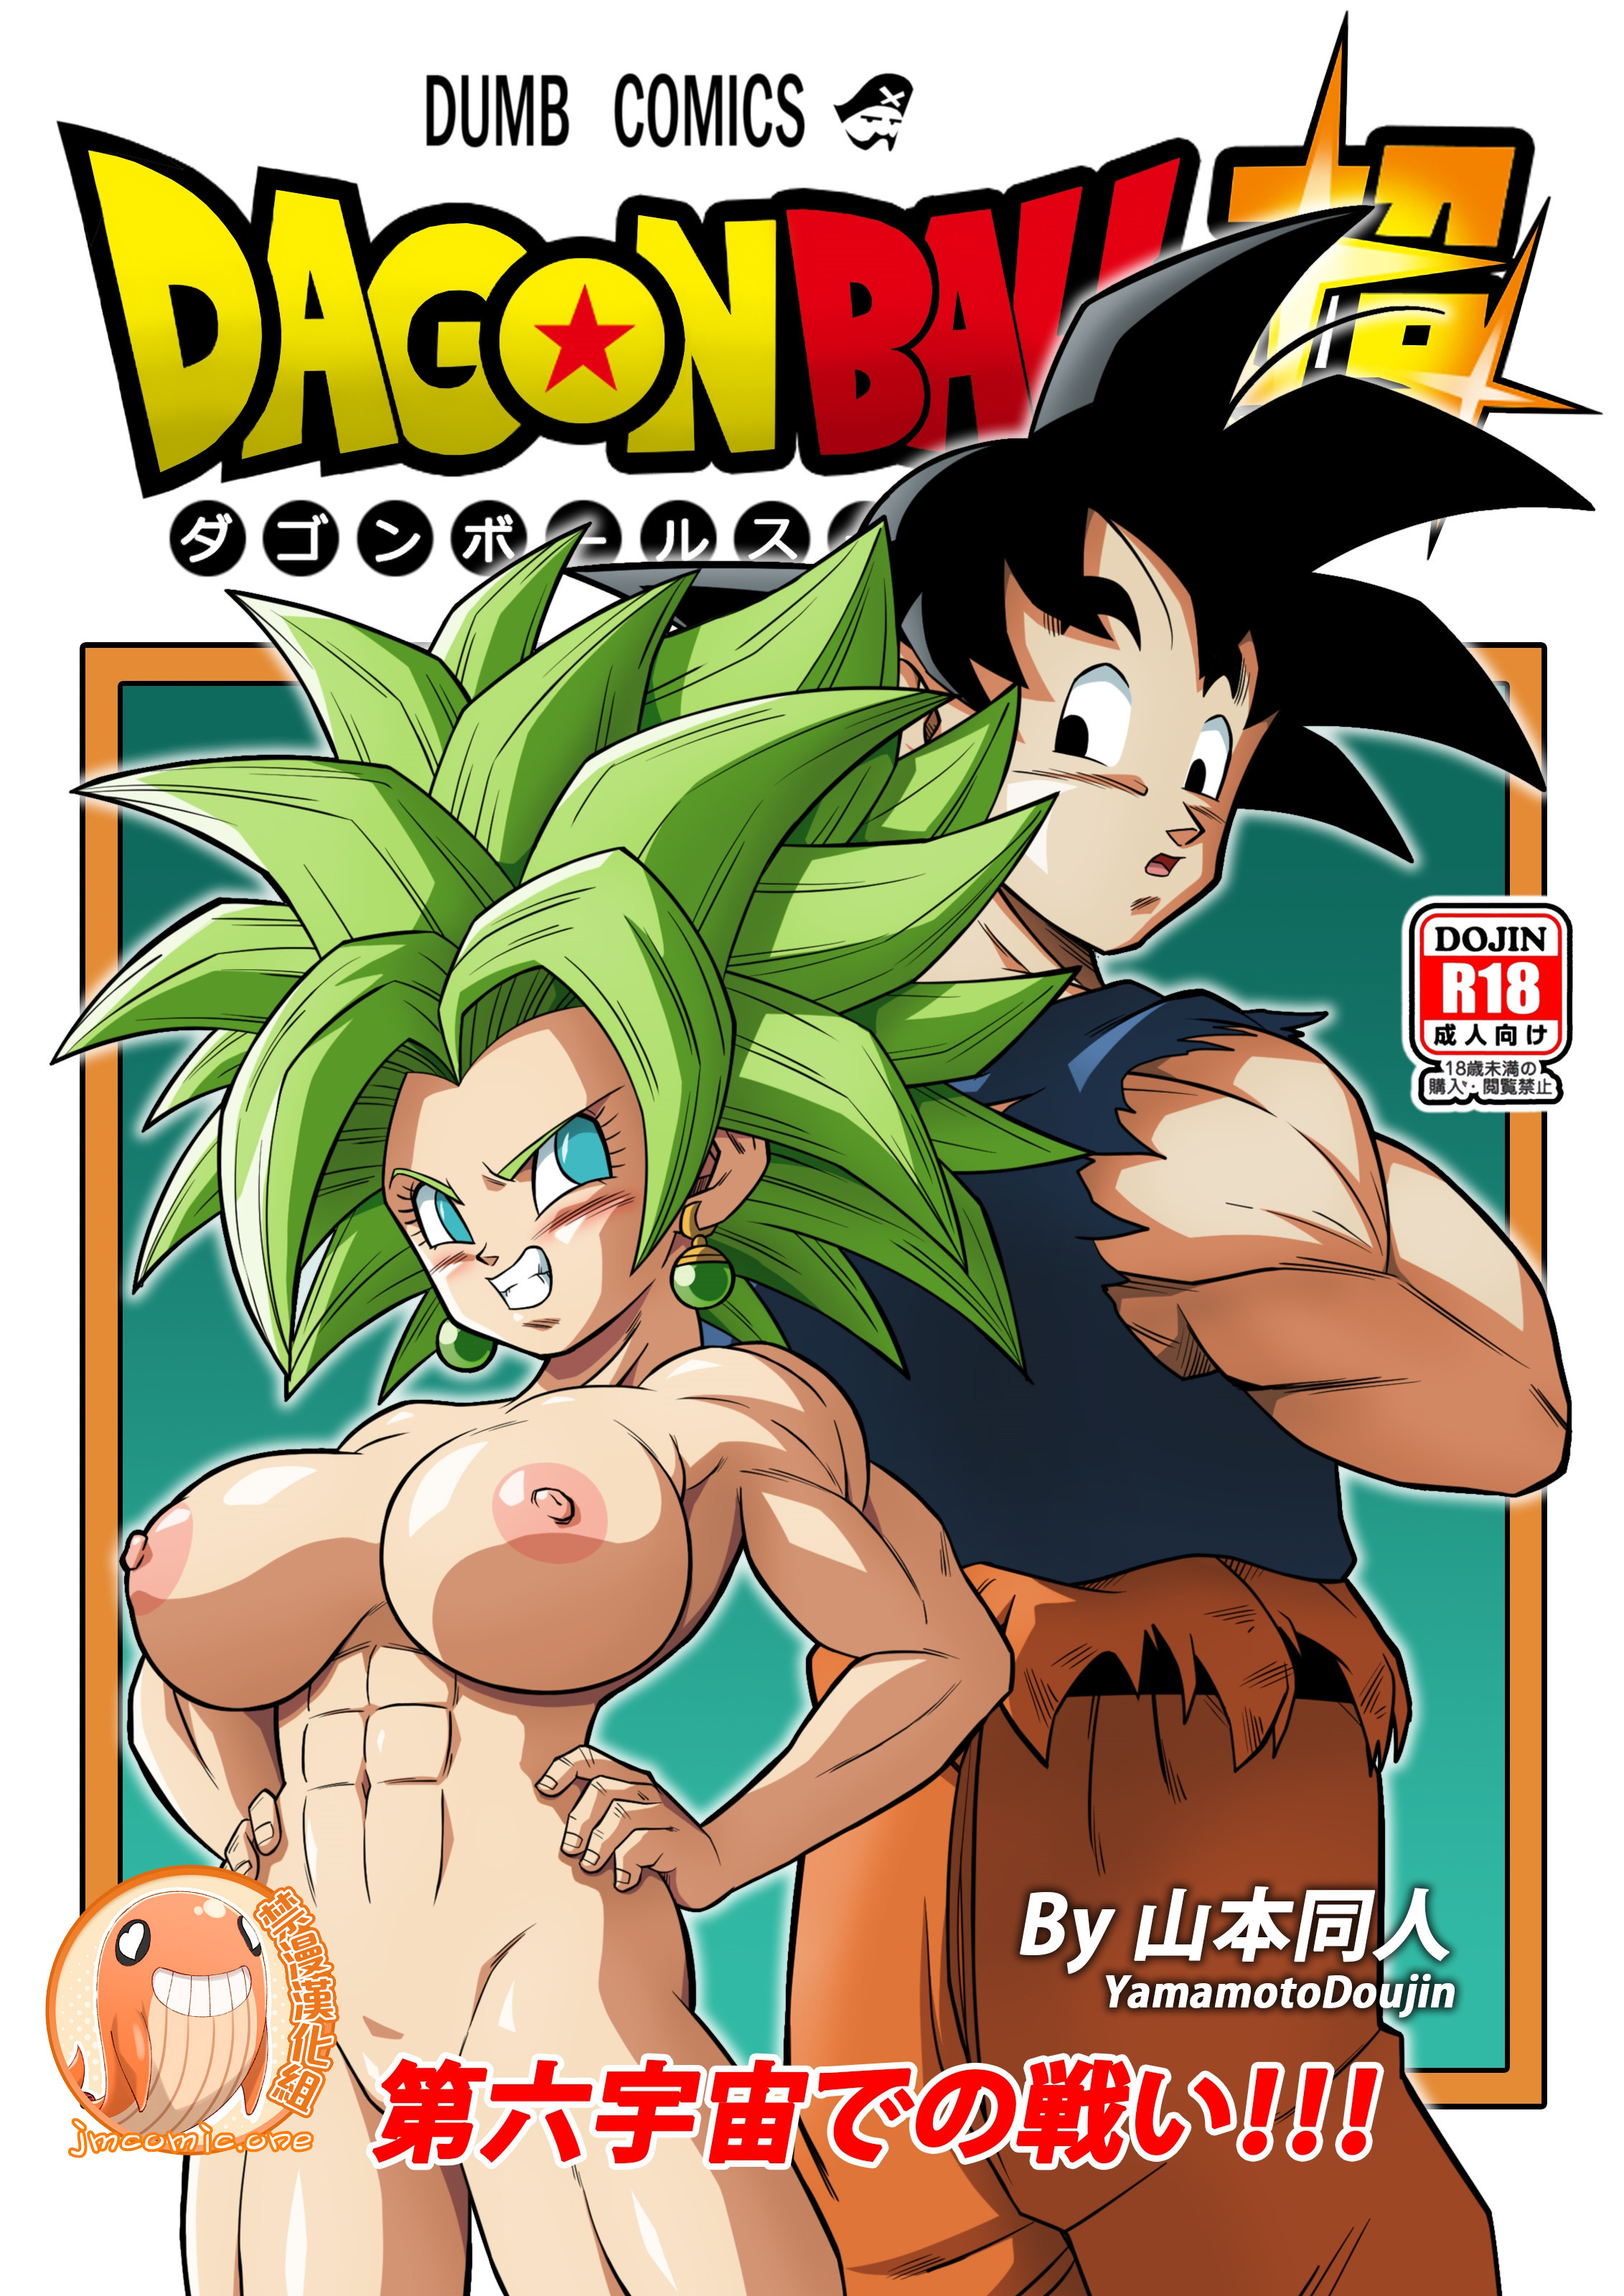 Dragonball Z Femdom Porn - Dragon Ball Super - Free Hentai Manga, Doujins & XXX